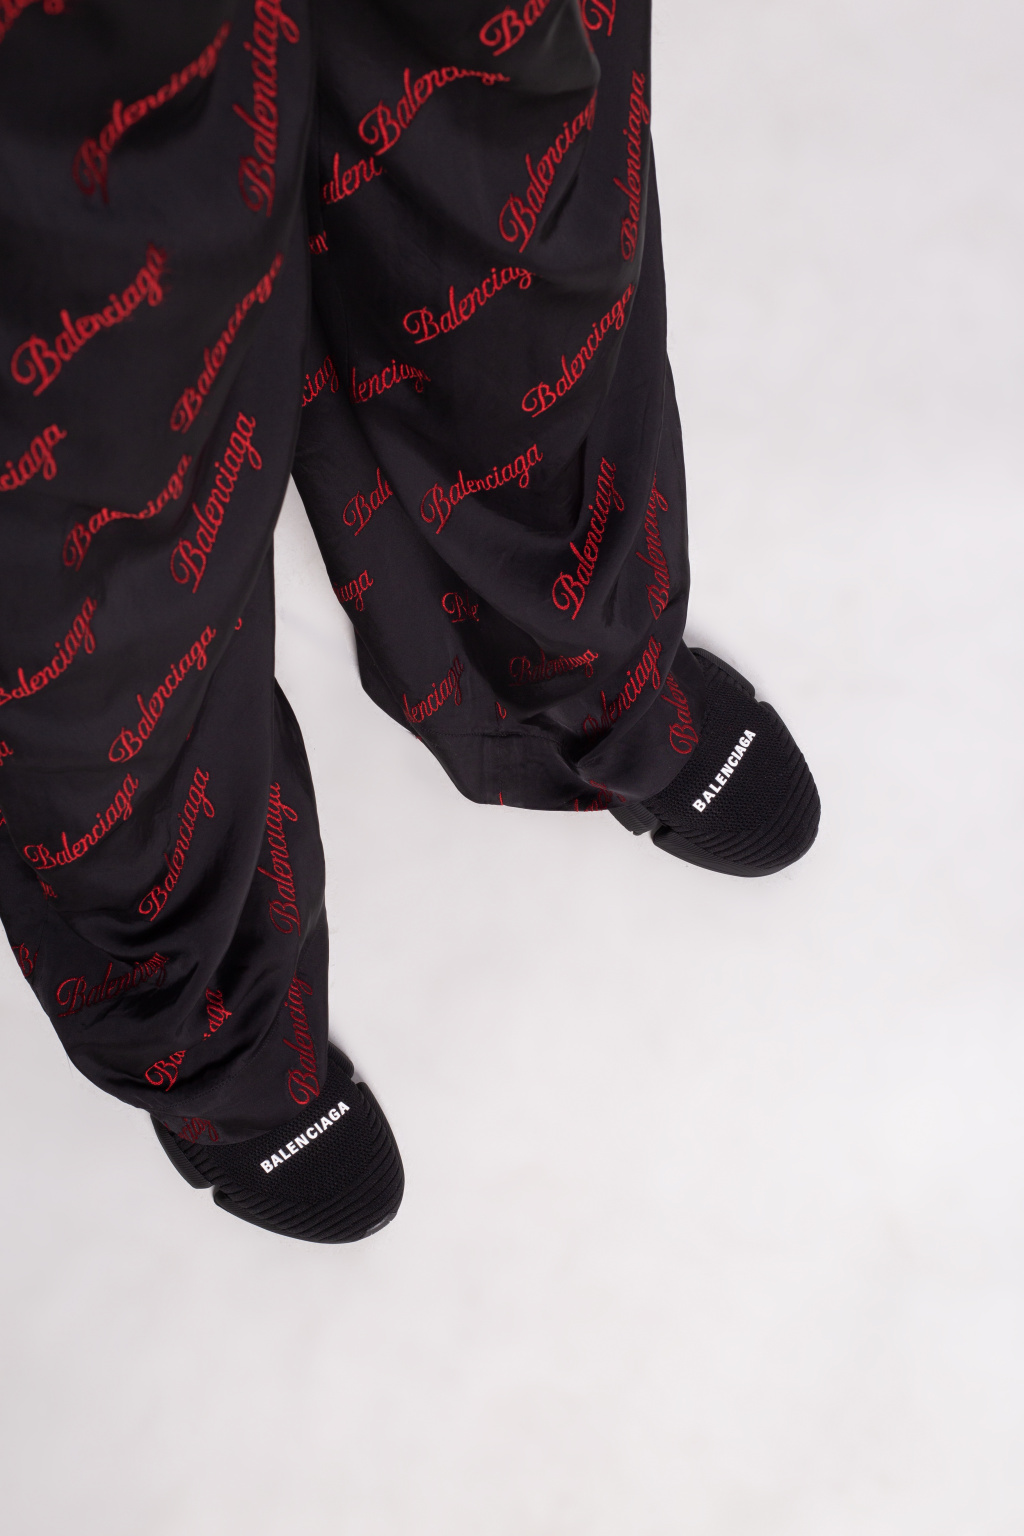 Balenciaga Men's Speed 2.0 Sneakers - Red Black - Size 7